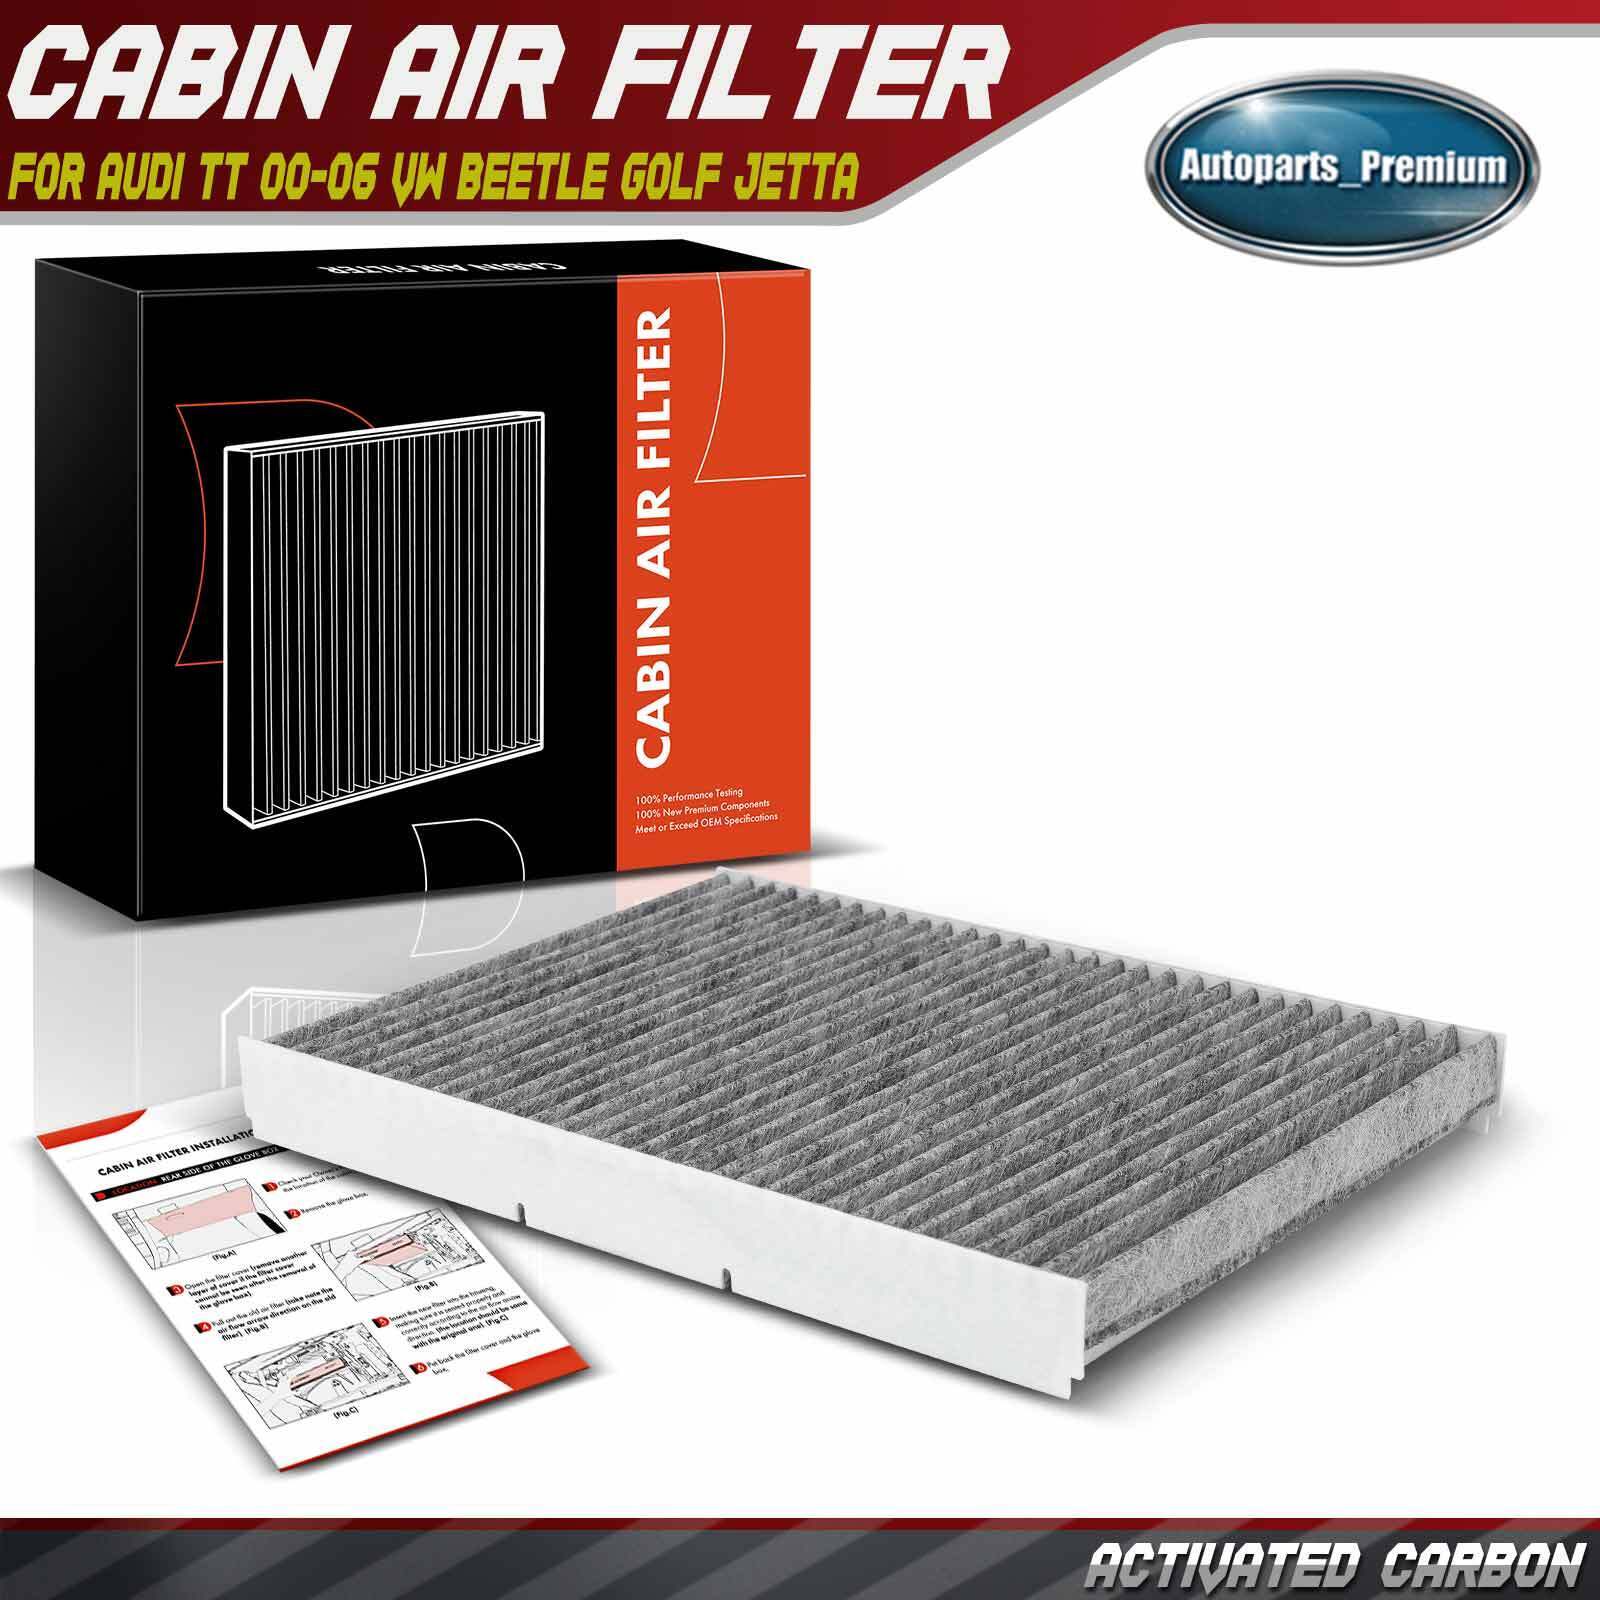 Activated Carbon Cabin Air Filter for Audi TT VW Beetle Golf Jetta Passat Cabrio